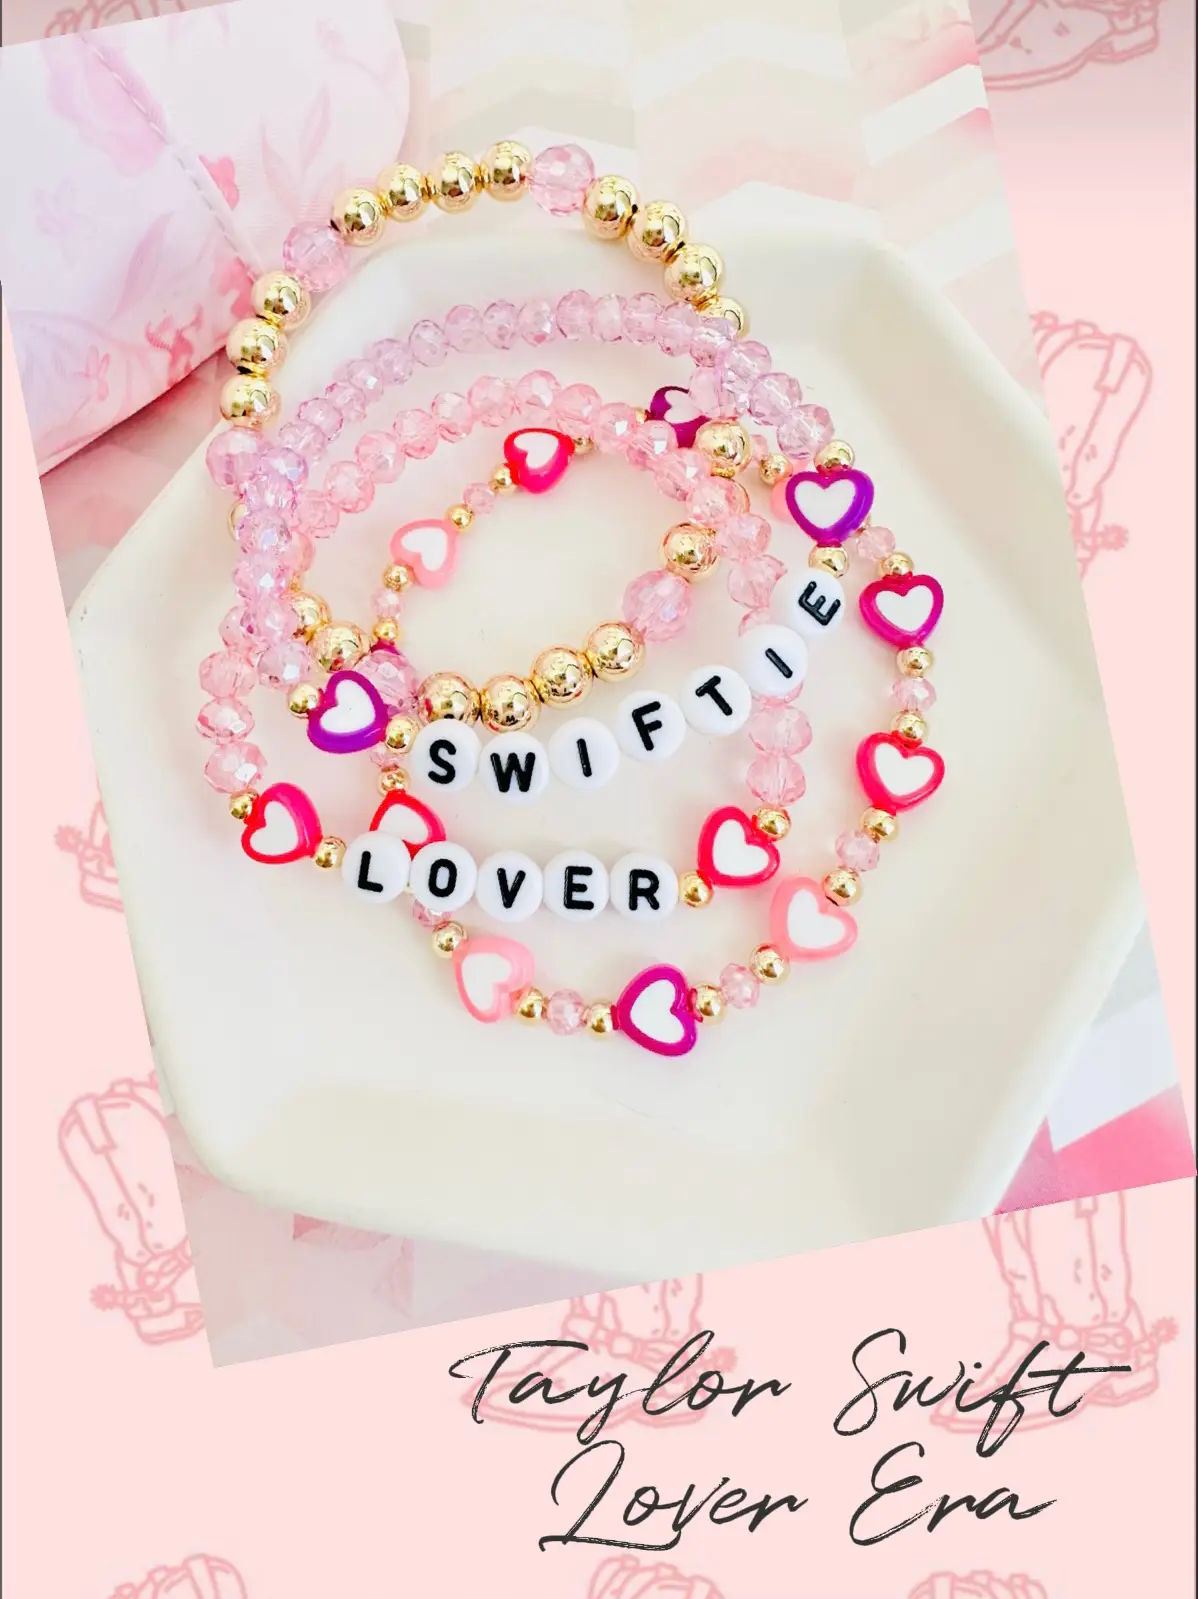 Taylor Swift Friendship Bracelet, Lover, Folklore, Evermore